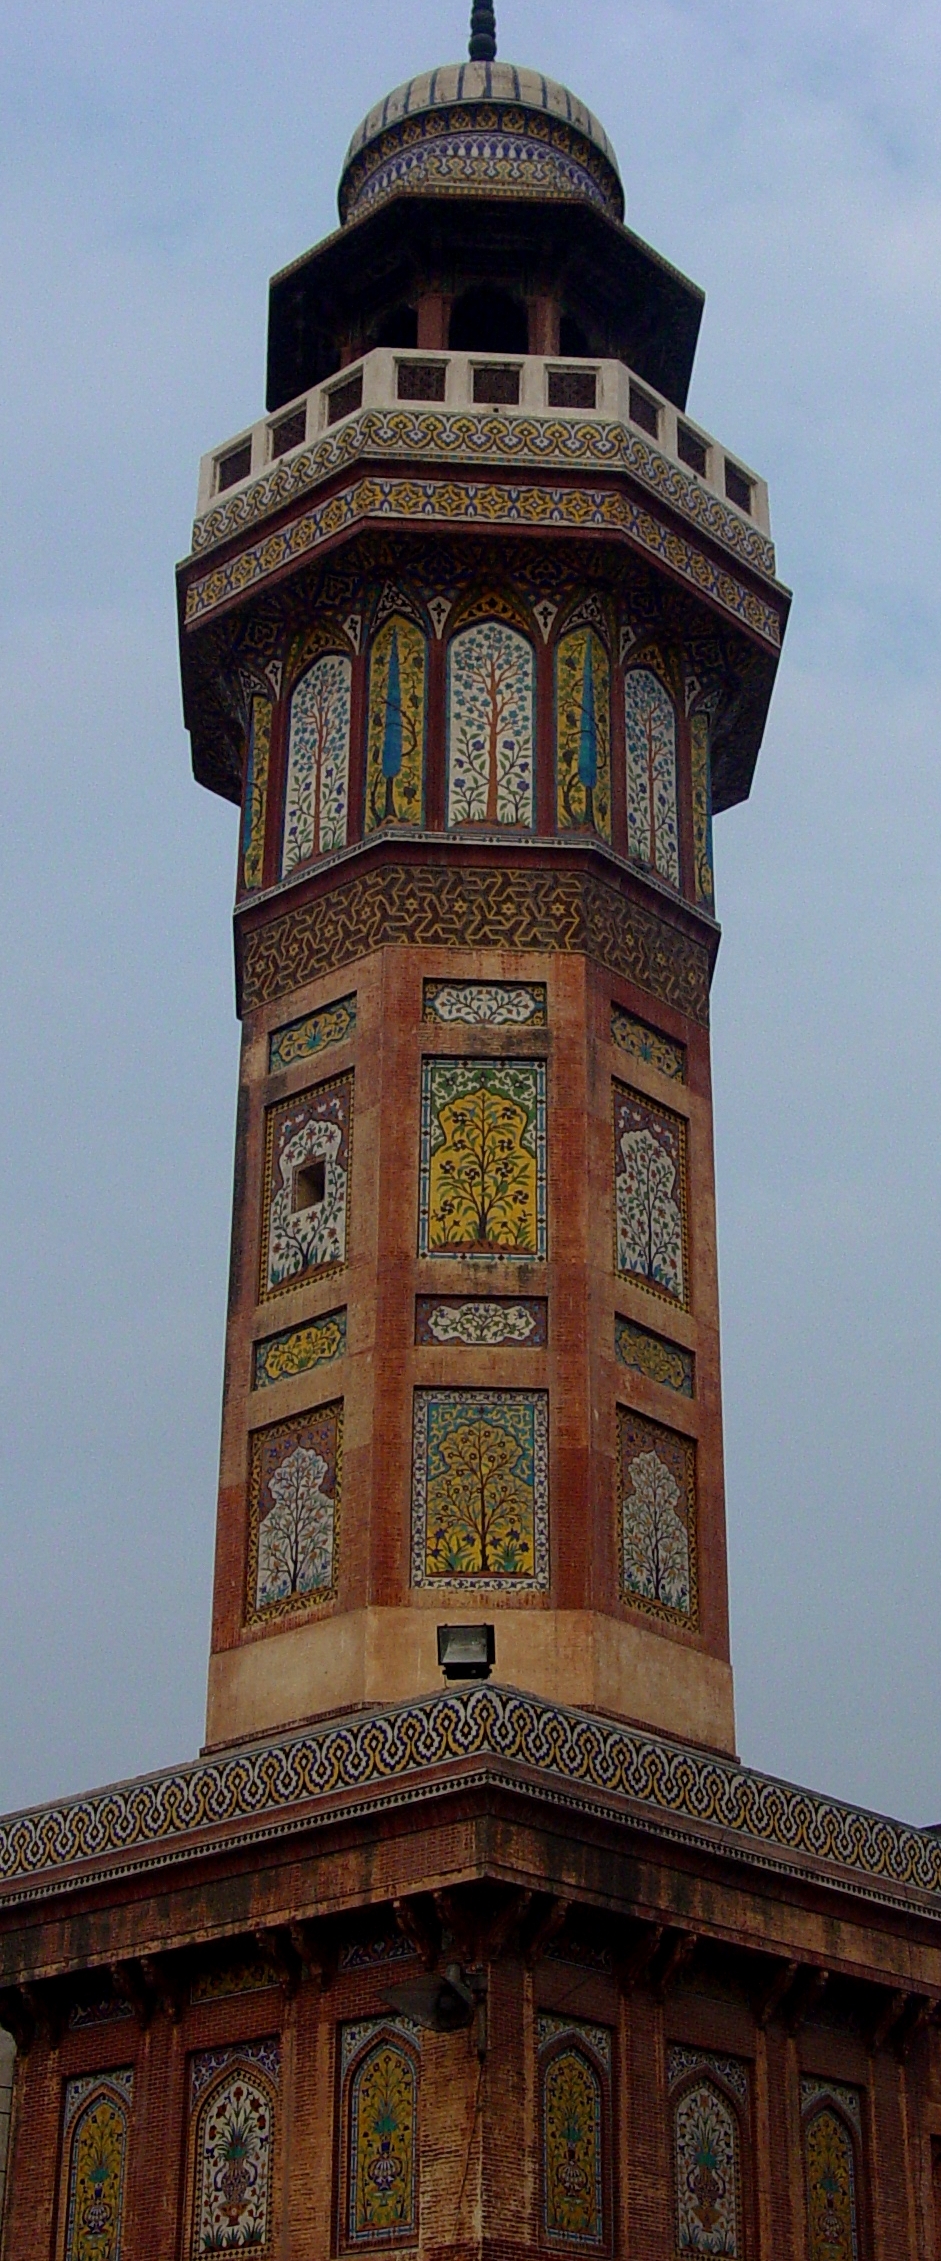 Minaret highly decorated